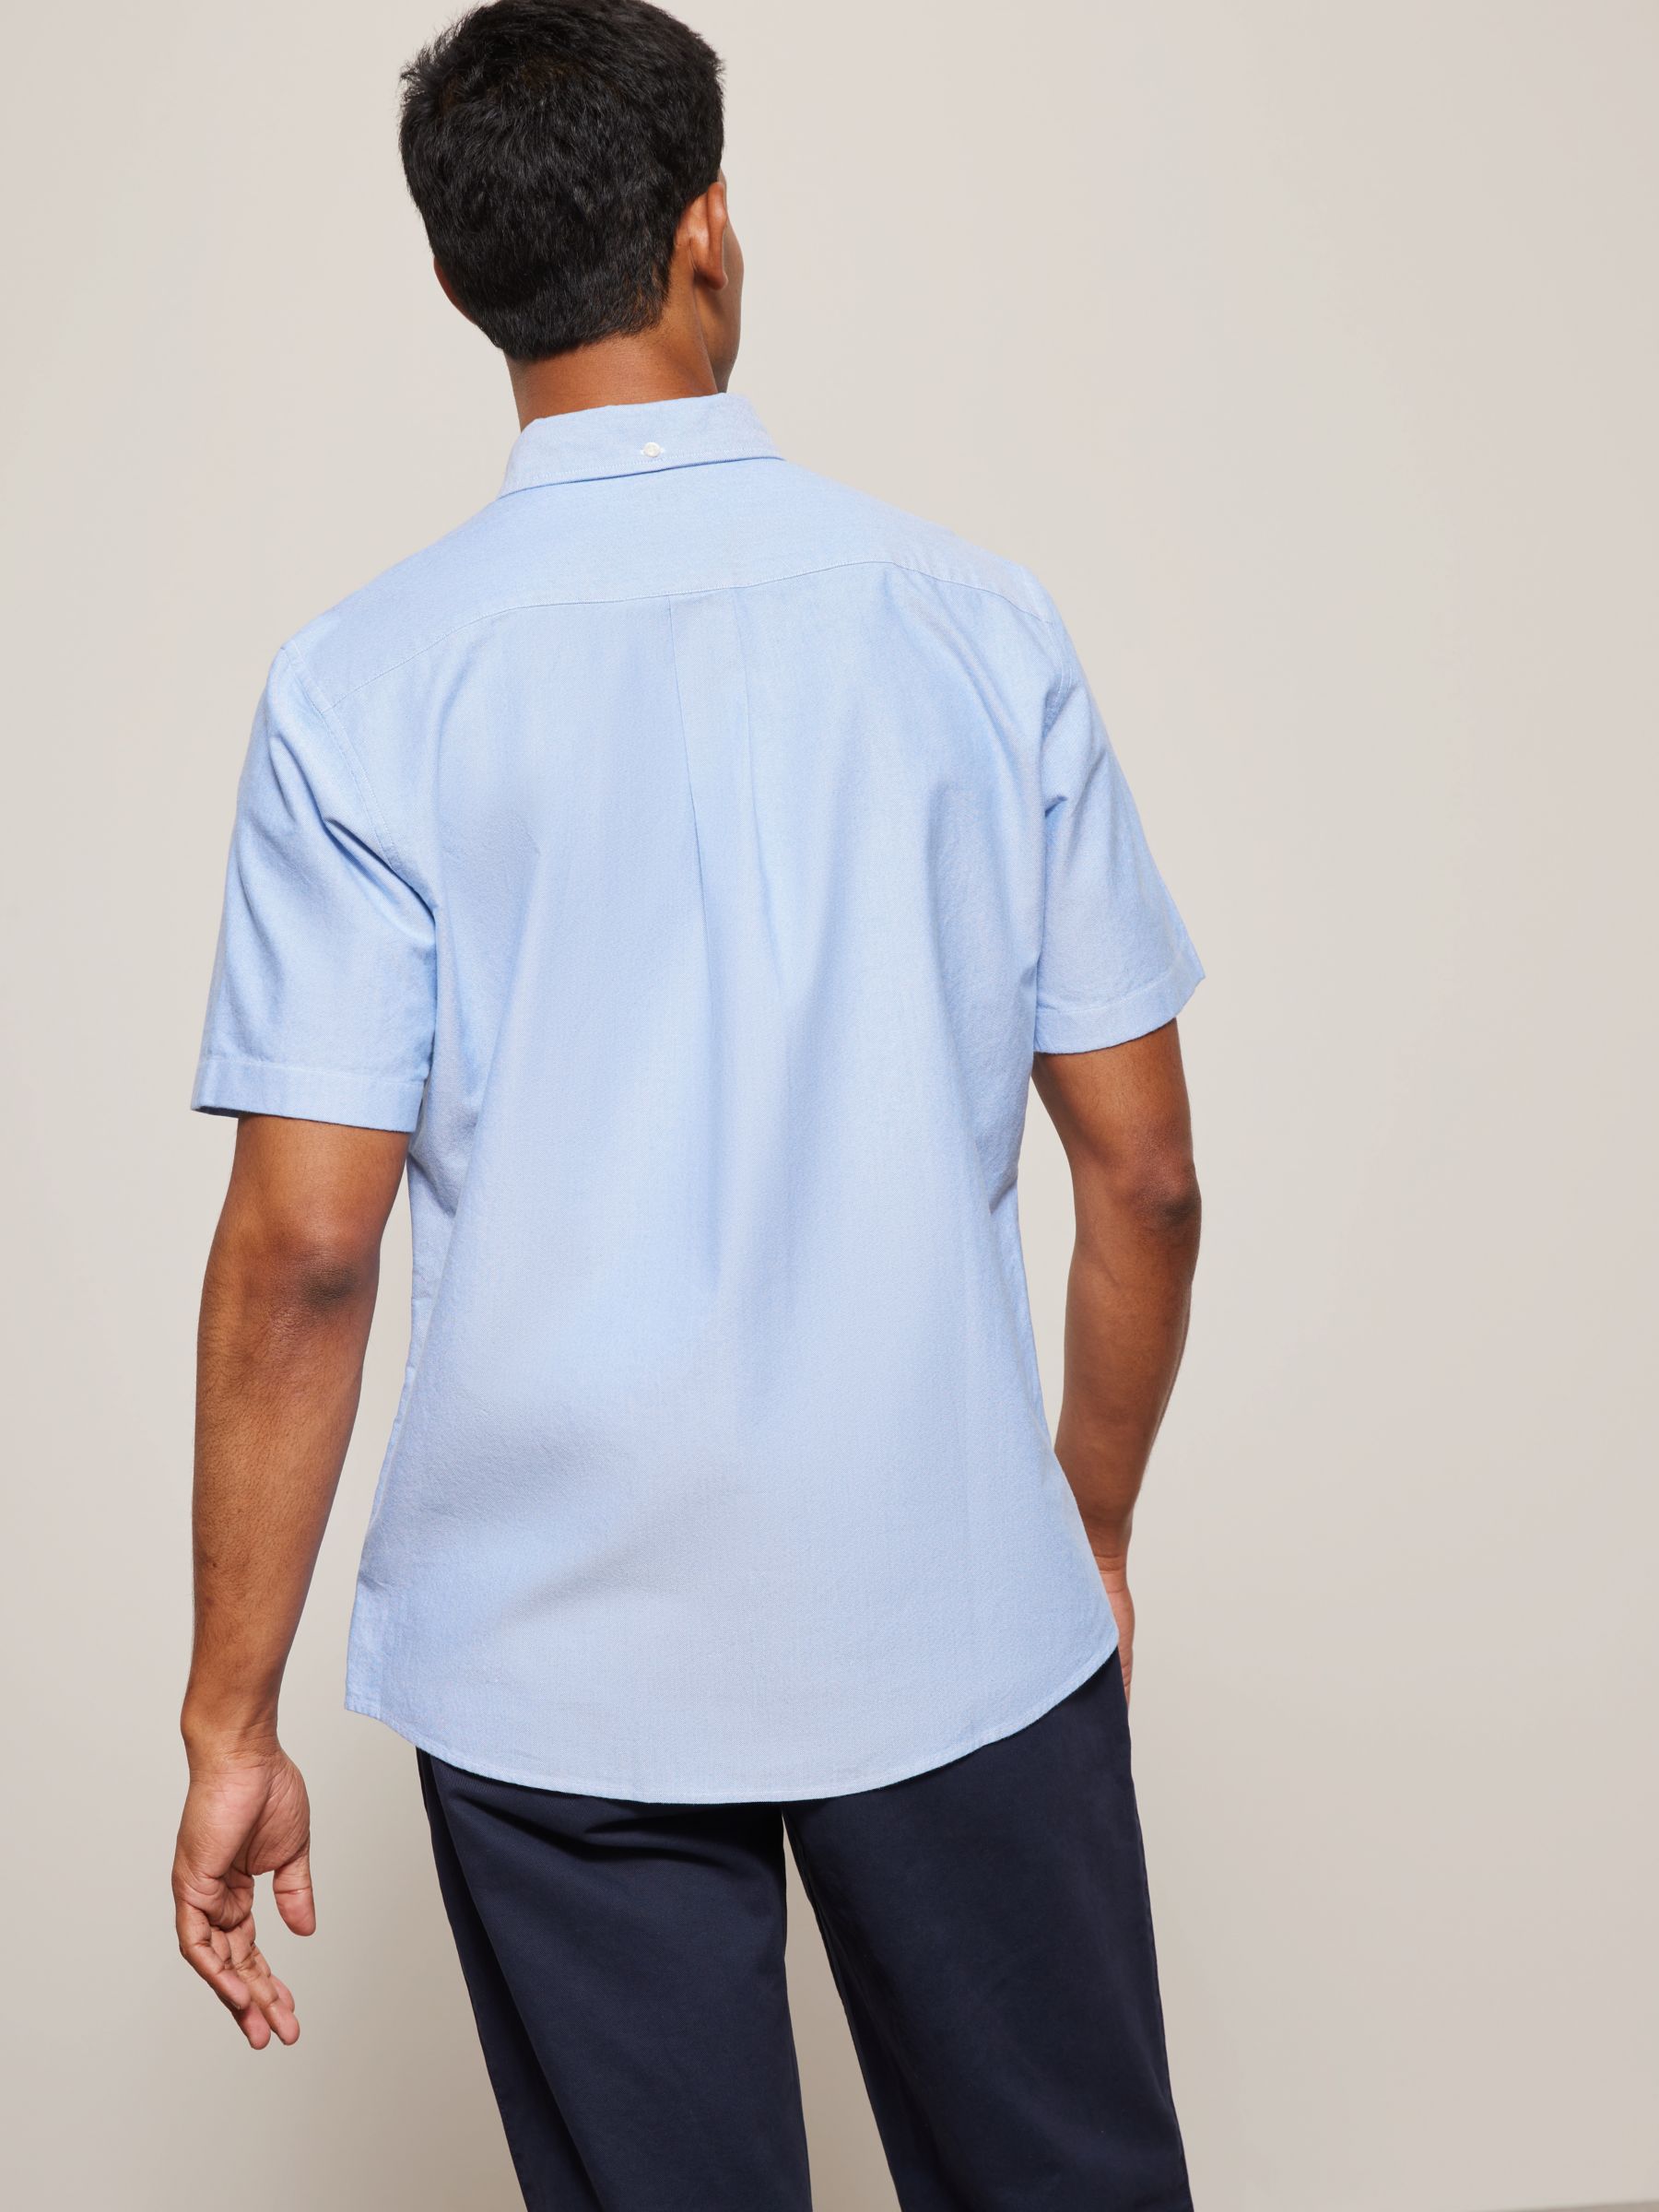 John Lewis Regular Fit Short Sleeve Shirt, Blue at John Lewis & Partners